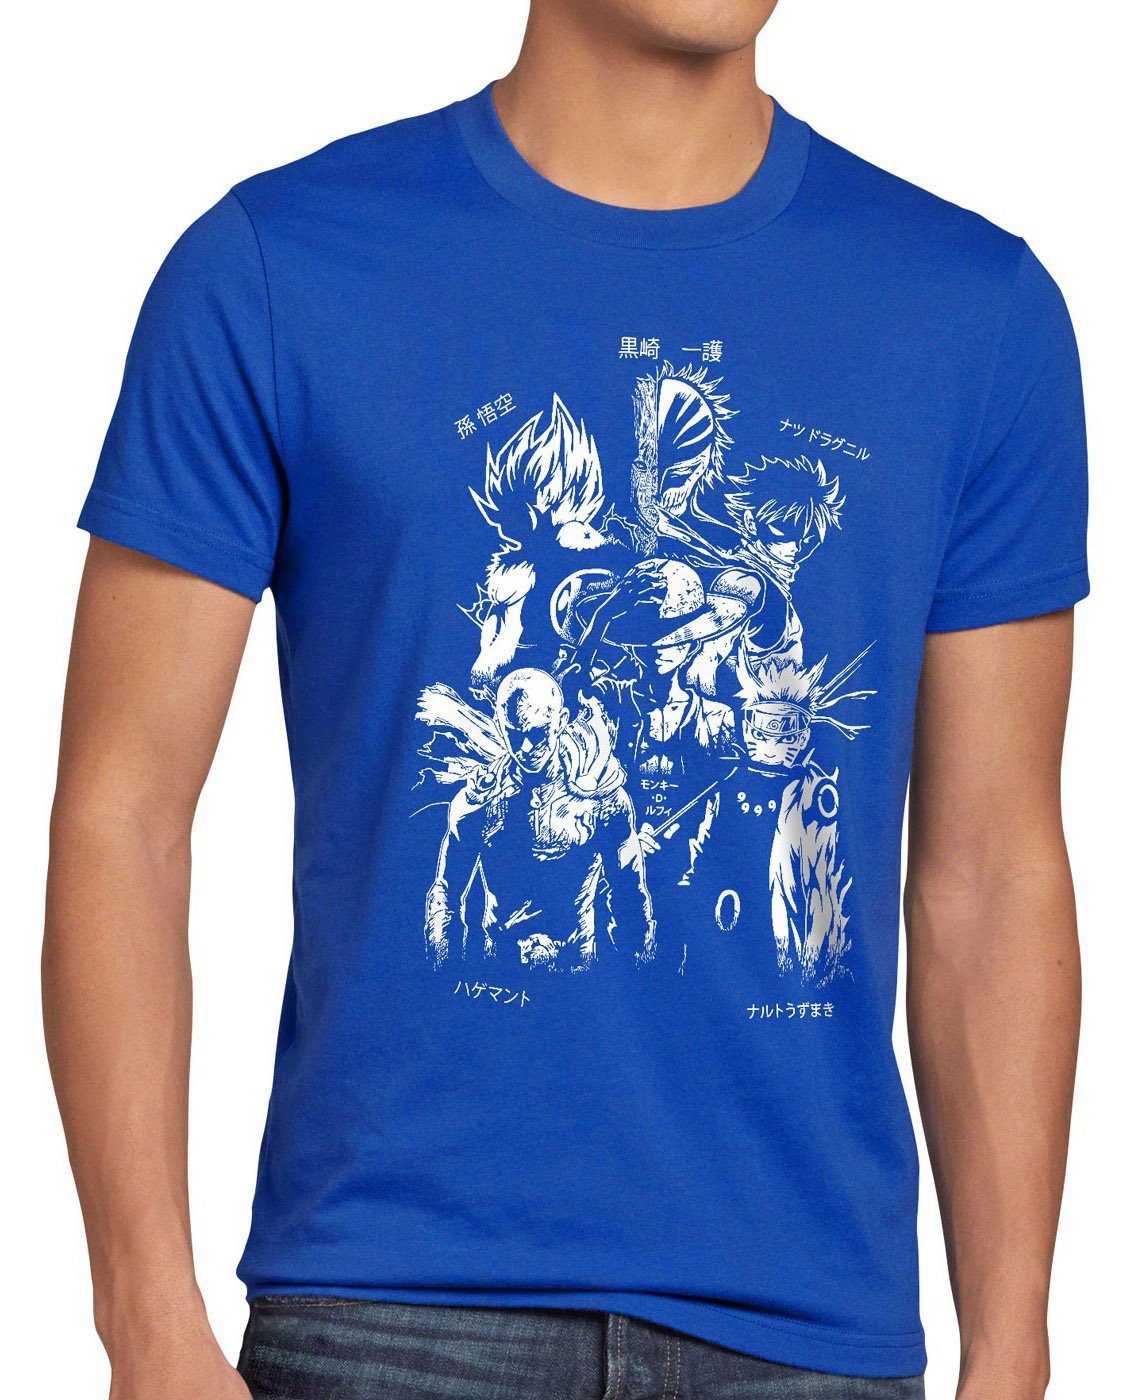 style3 Print-Shirt Herren T-Shirt Anime Heroes goku luffy saitama piece son punch dragon fairy ball blau